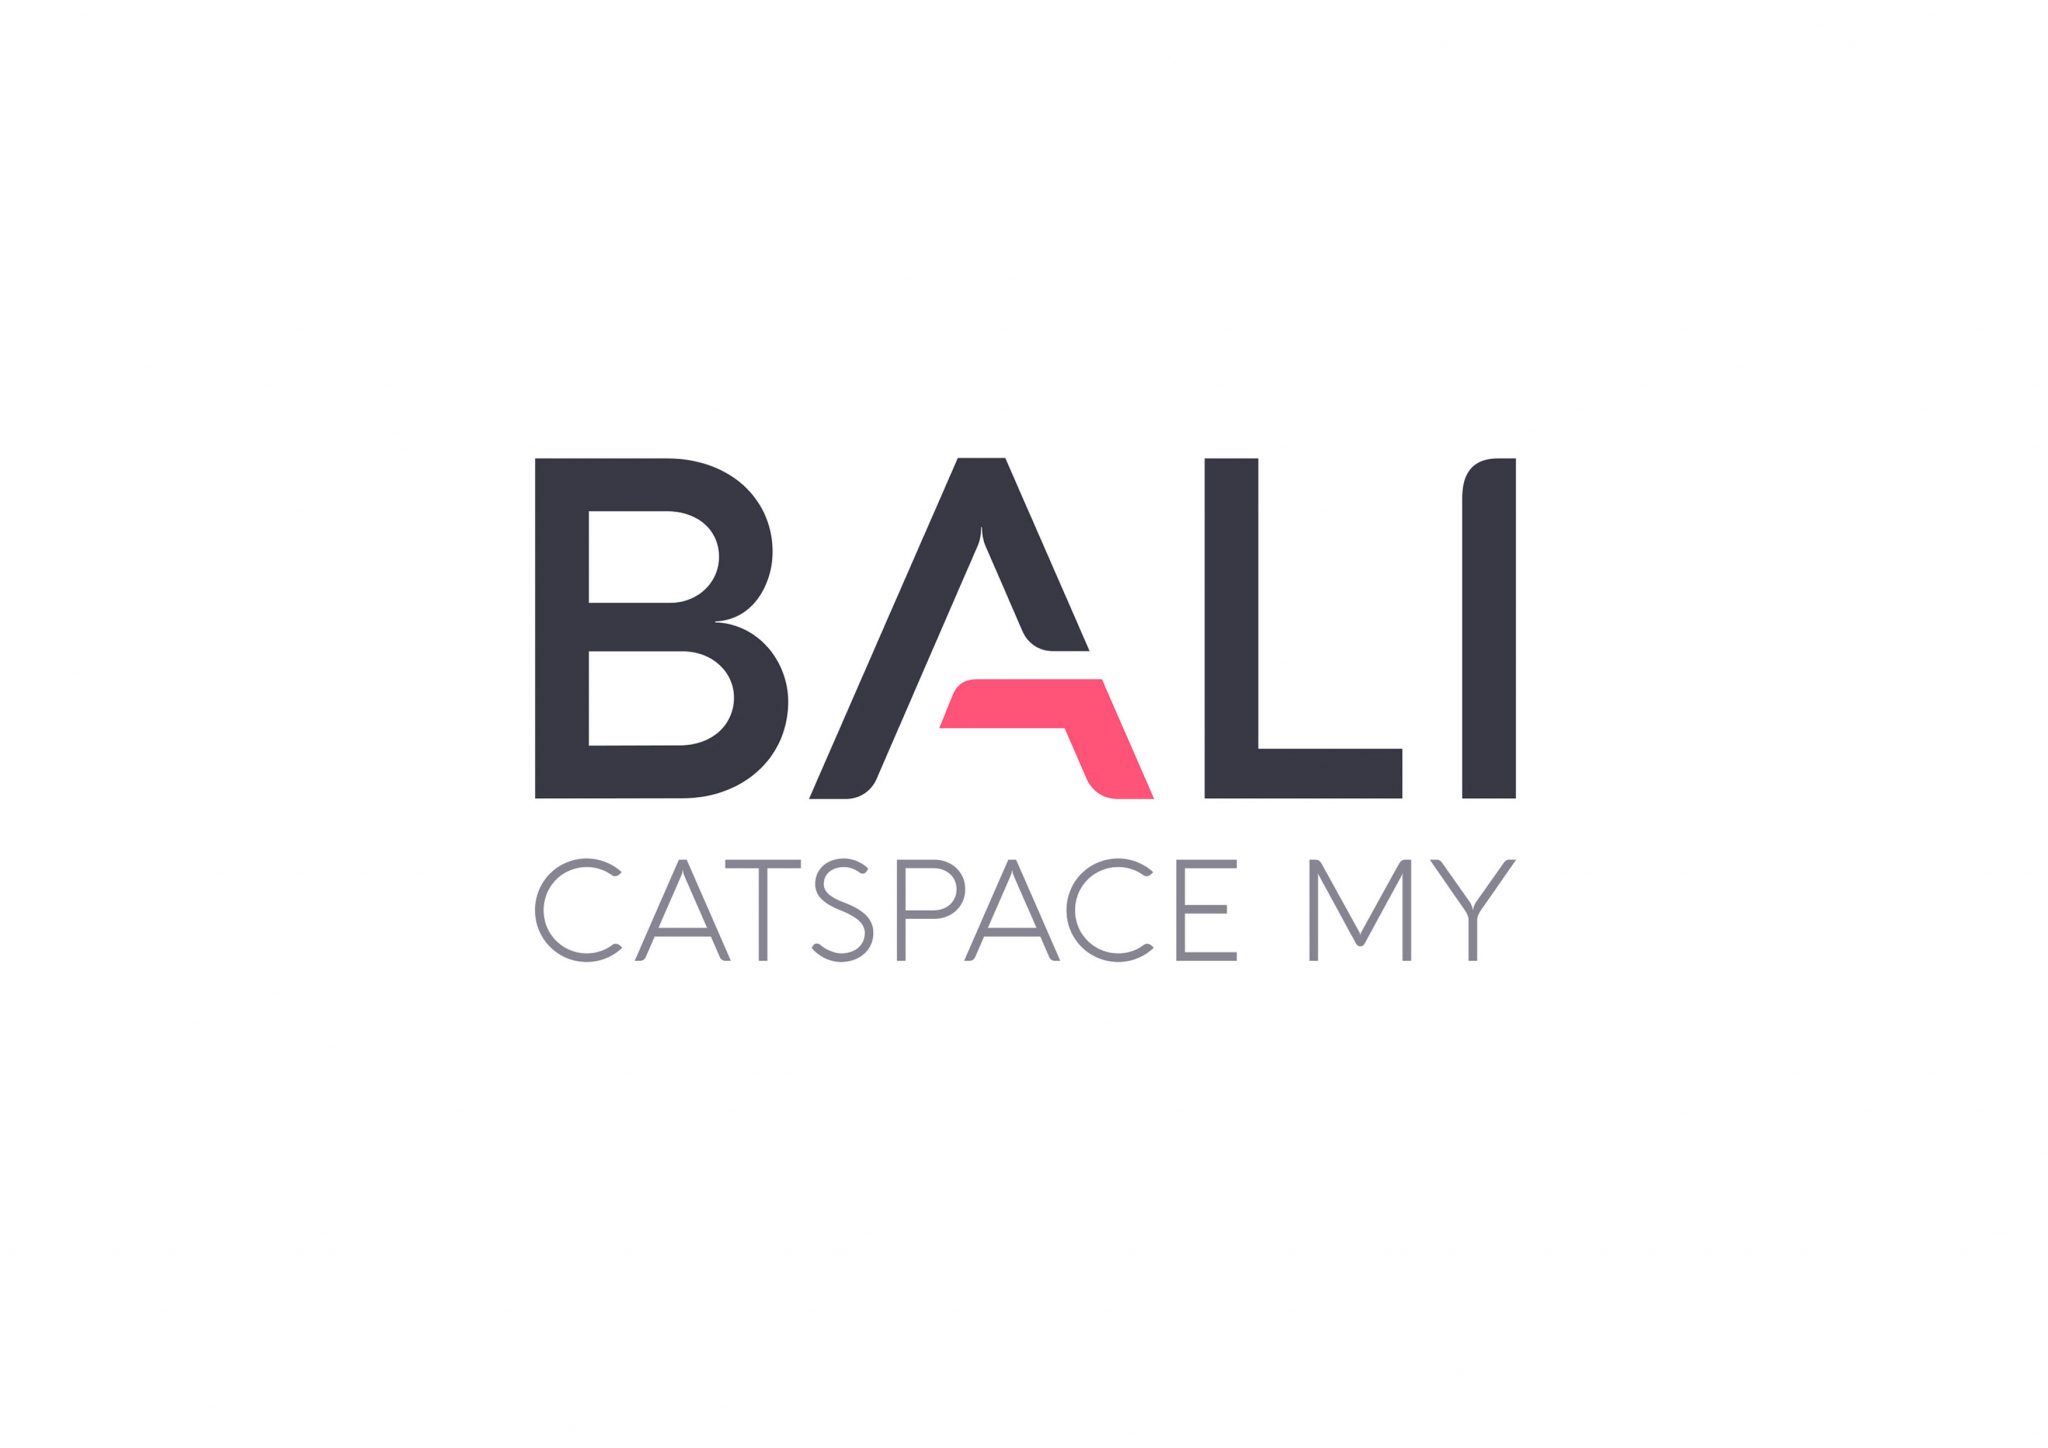 BALI CATSPACE MY